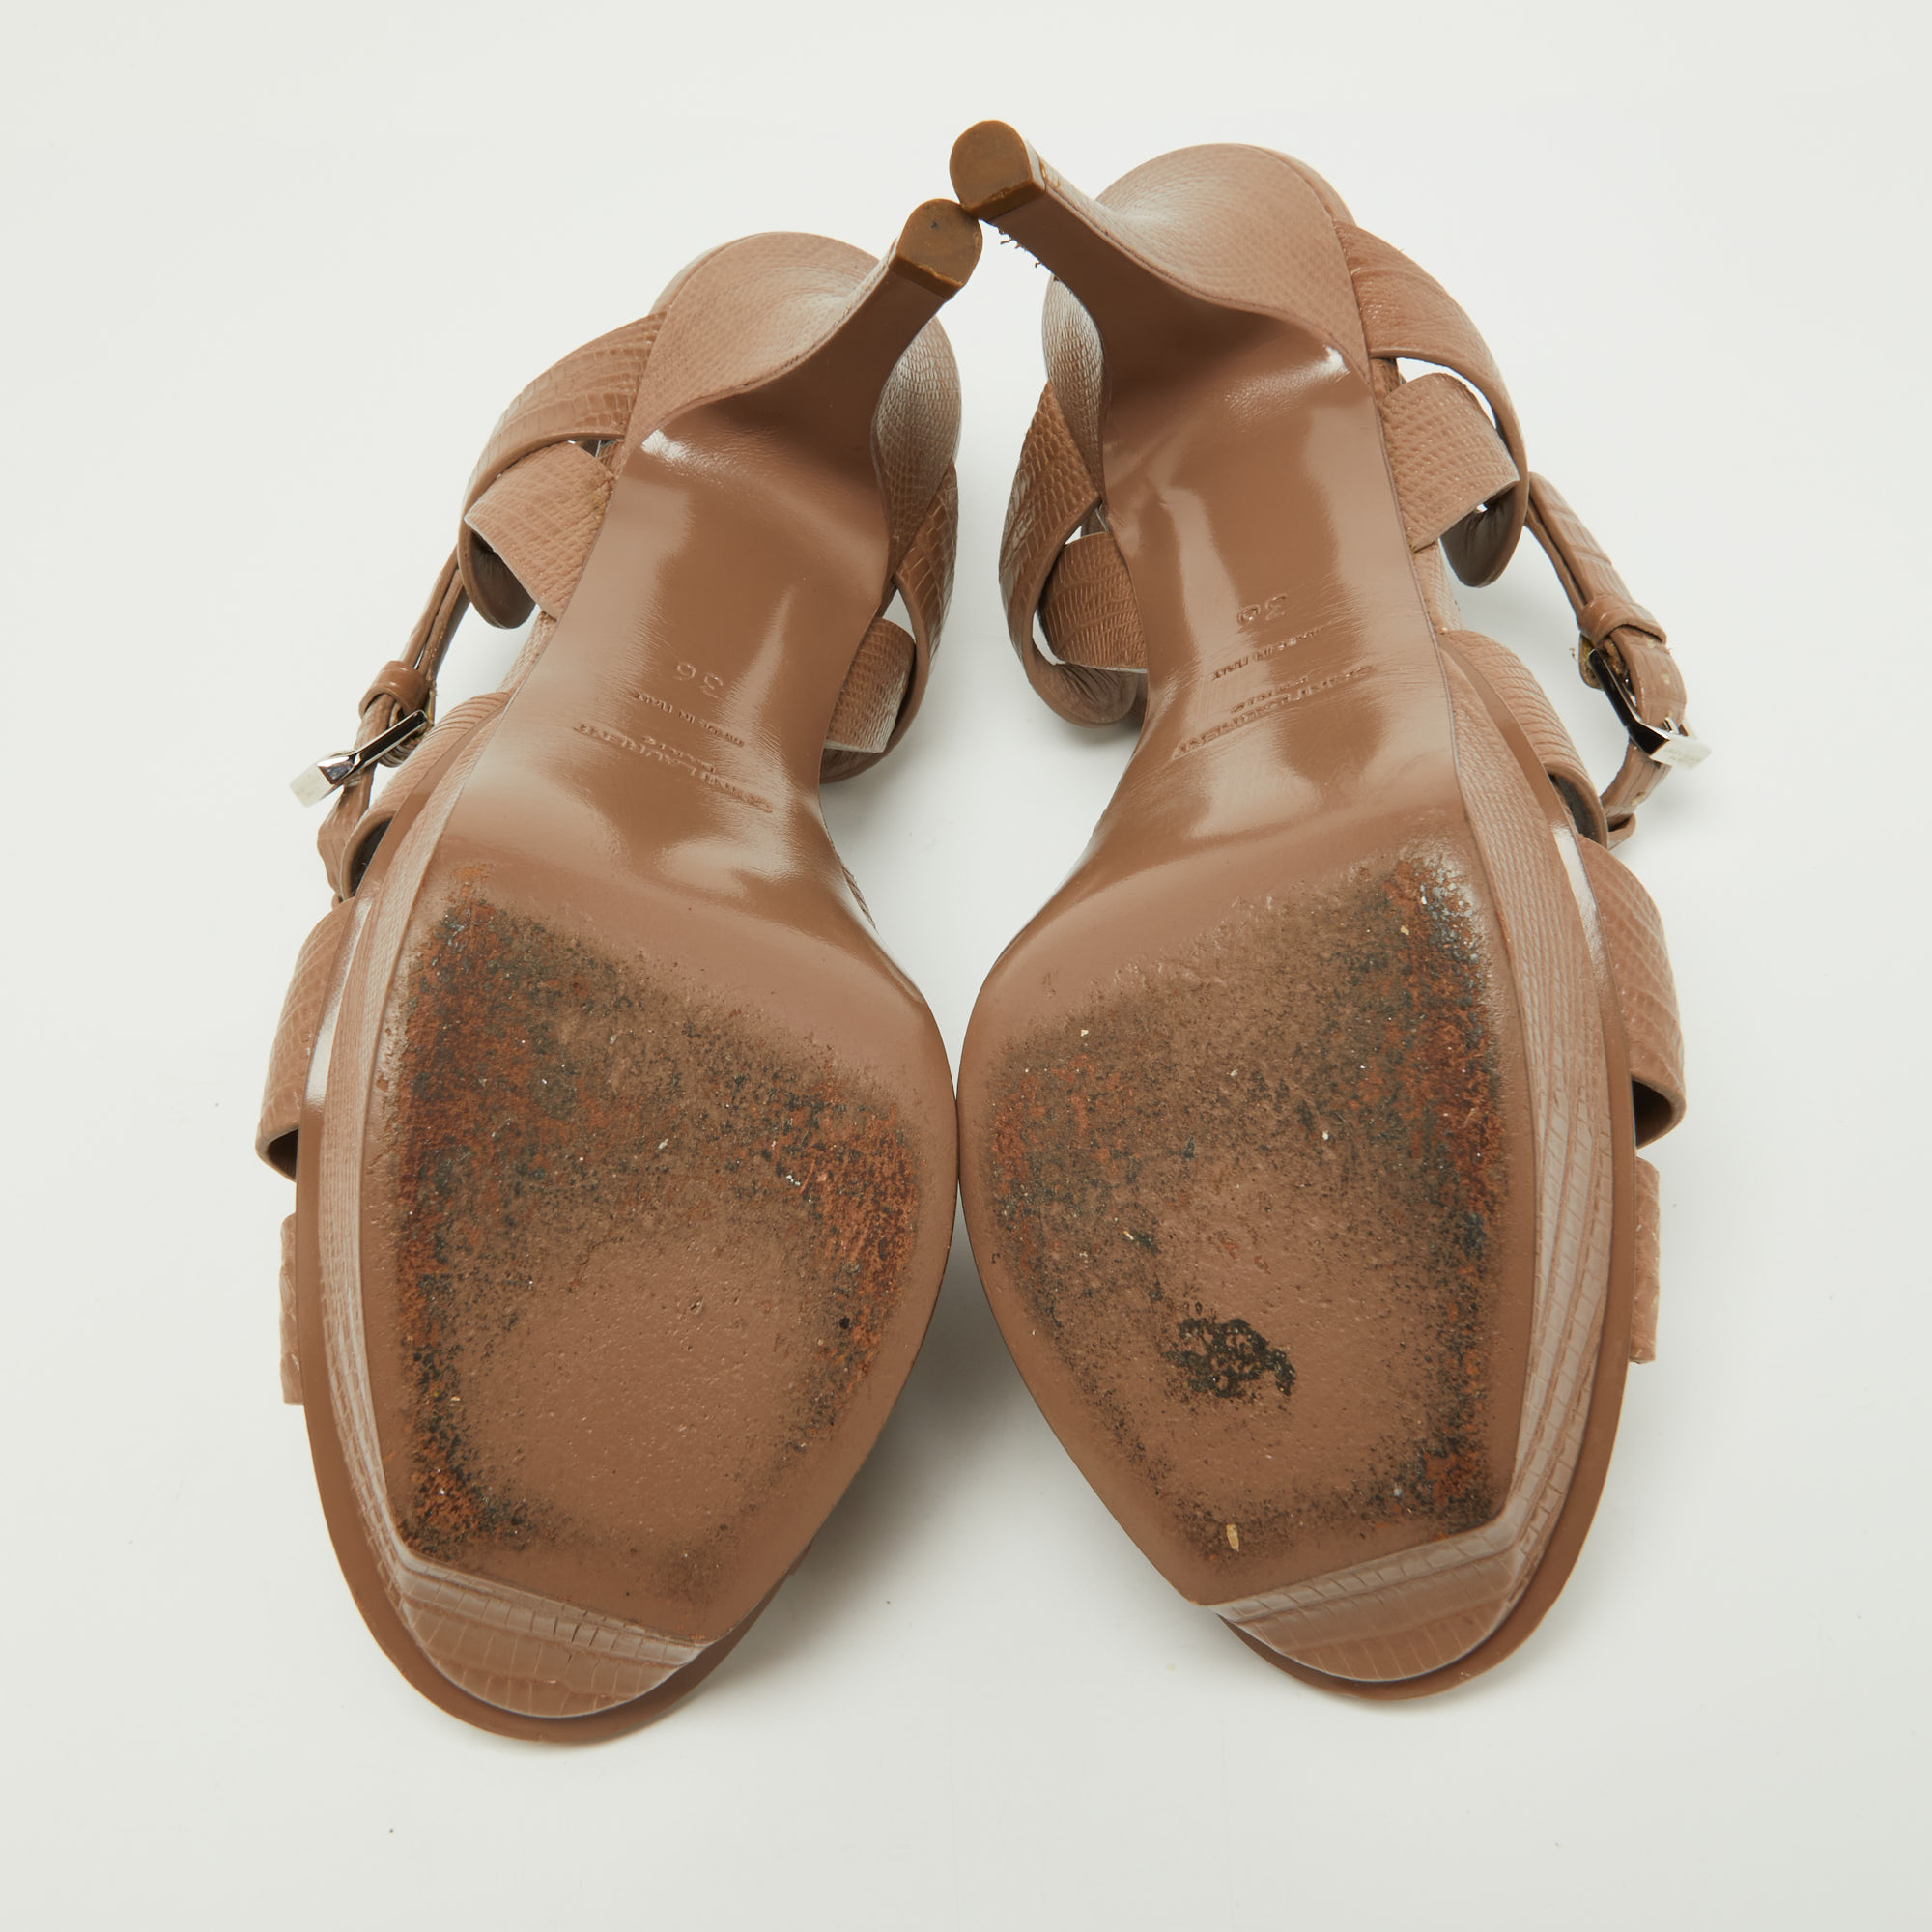 Saint Laurent Beige Lizard Embossed Leather Tribute Sandals Size 36